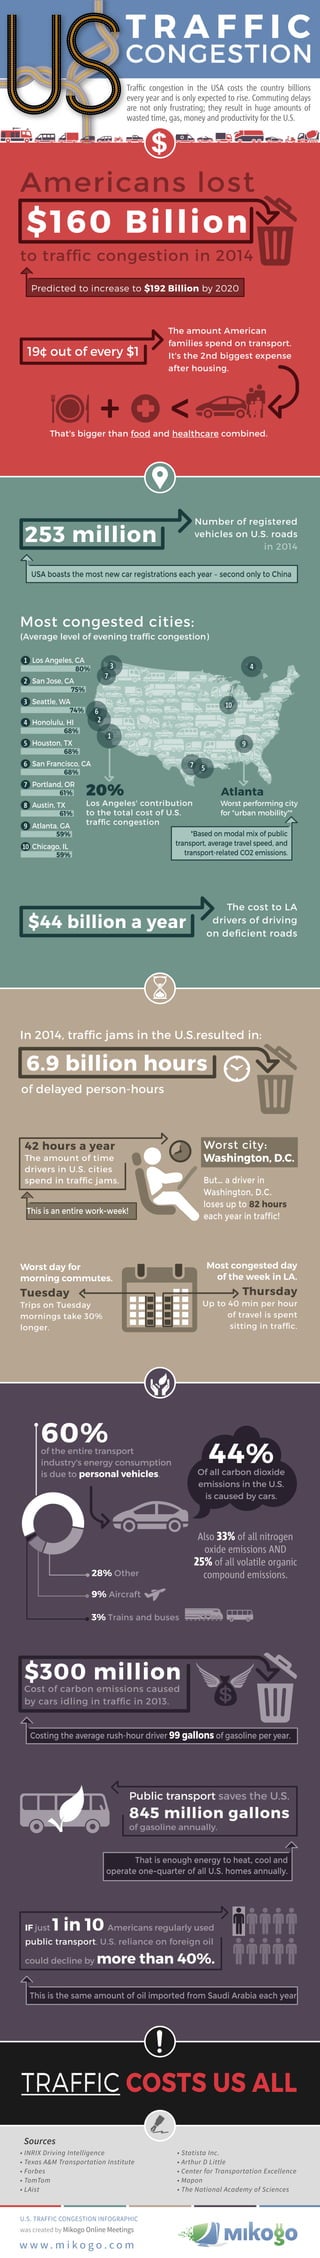 The Annual Cost of U.S. Traffic Congestion – $160 Billion